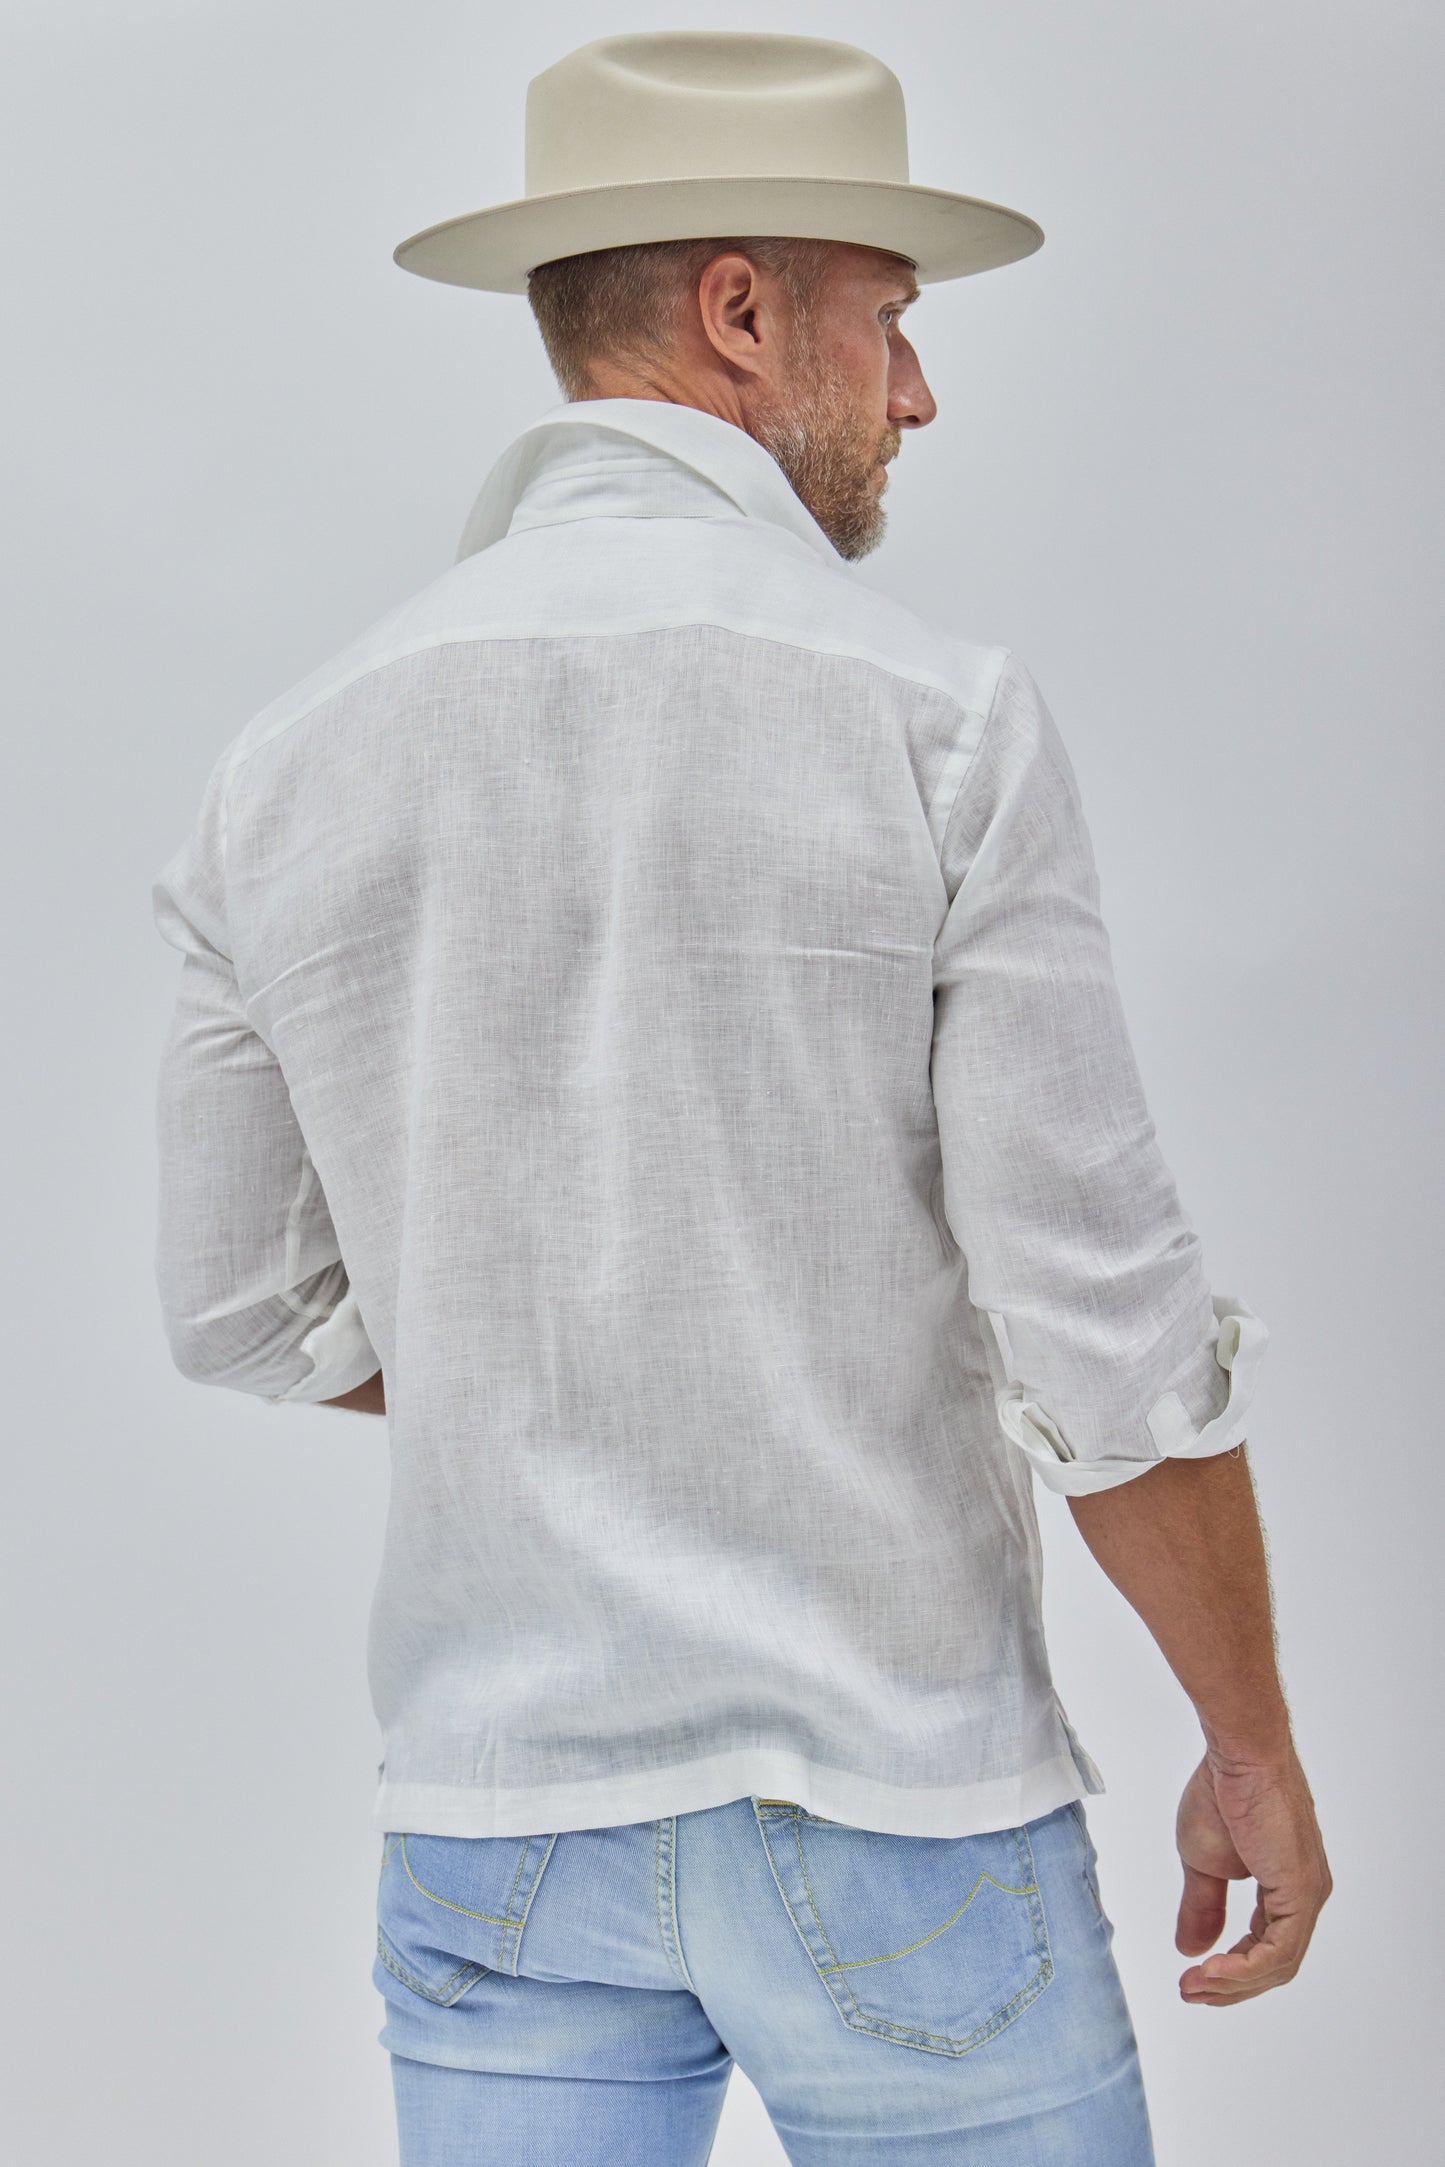 Positano Work Shirt in White Linen